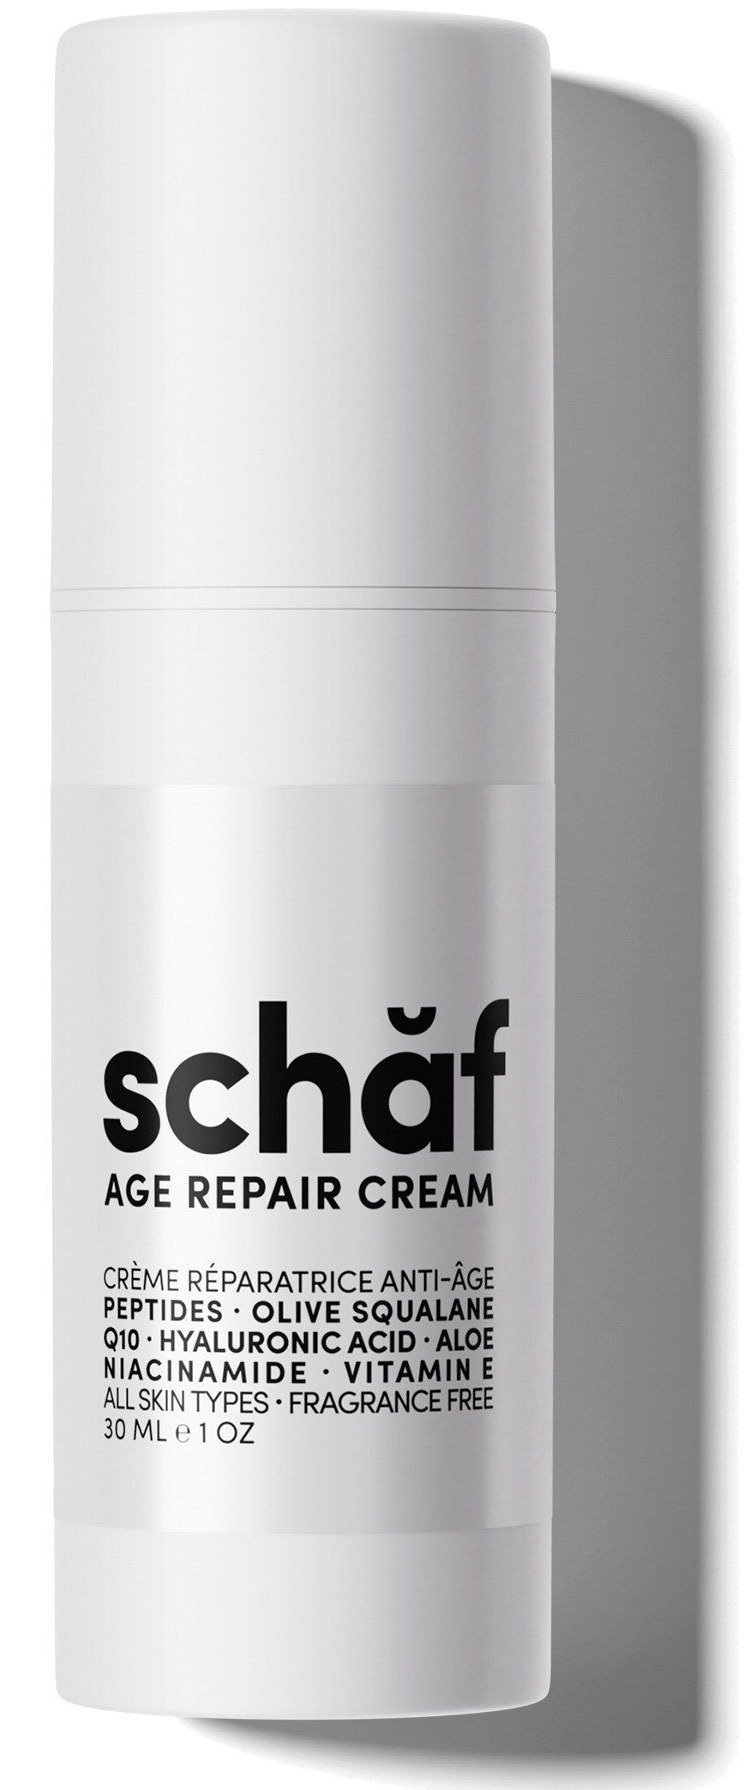 schaf Age Repair Cream